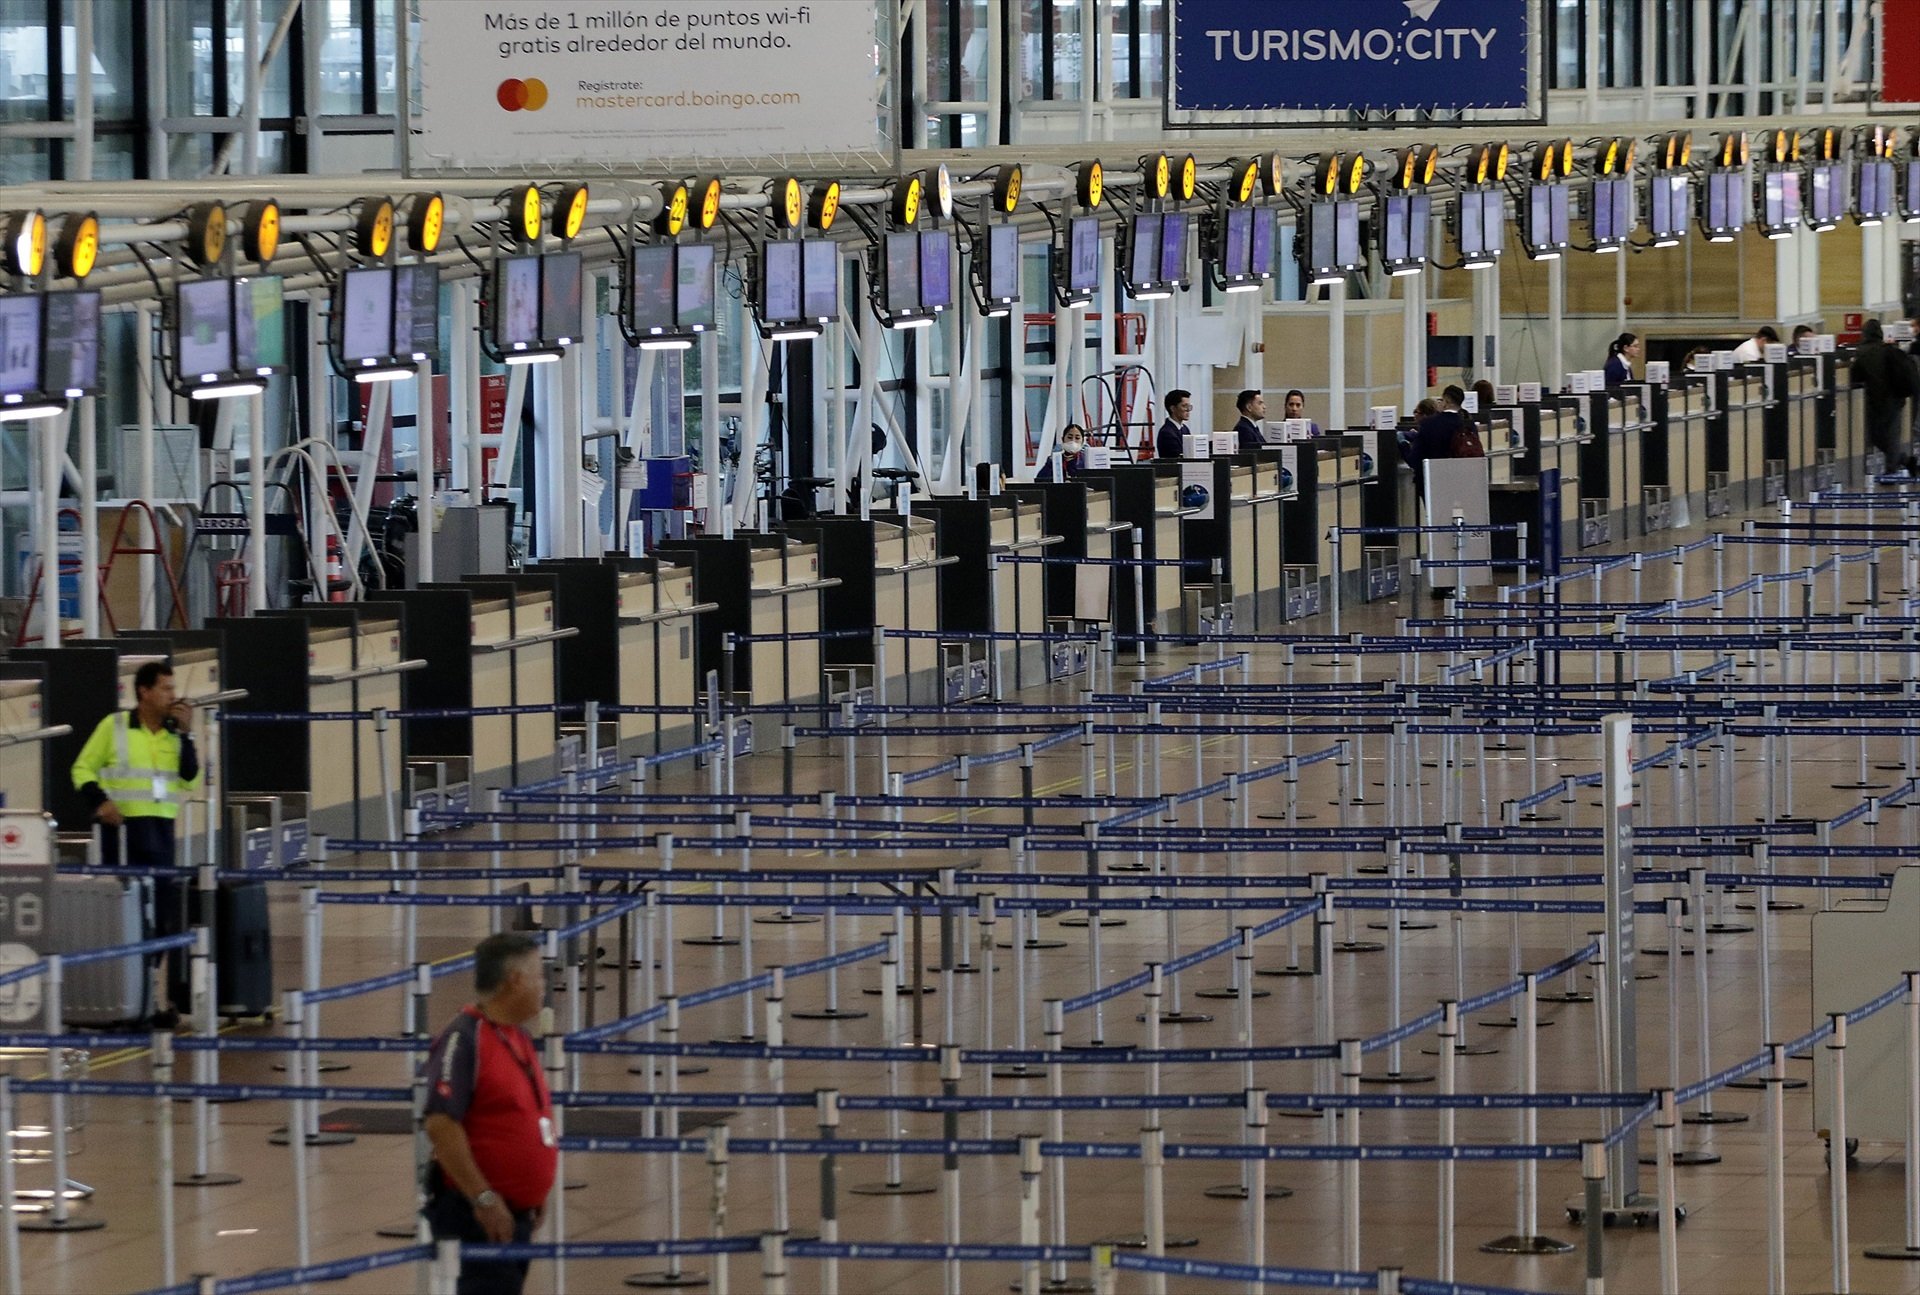 L'aeroport de Santiago de Xile on s'ha iniciat el tiroteig / Francisco Castillo, Agencia Uno, d, DPA